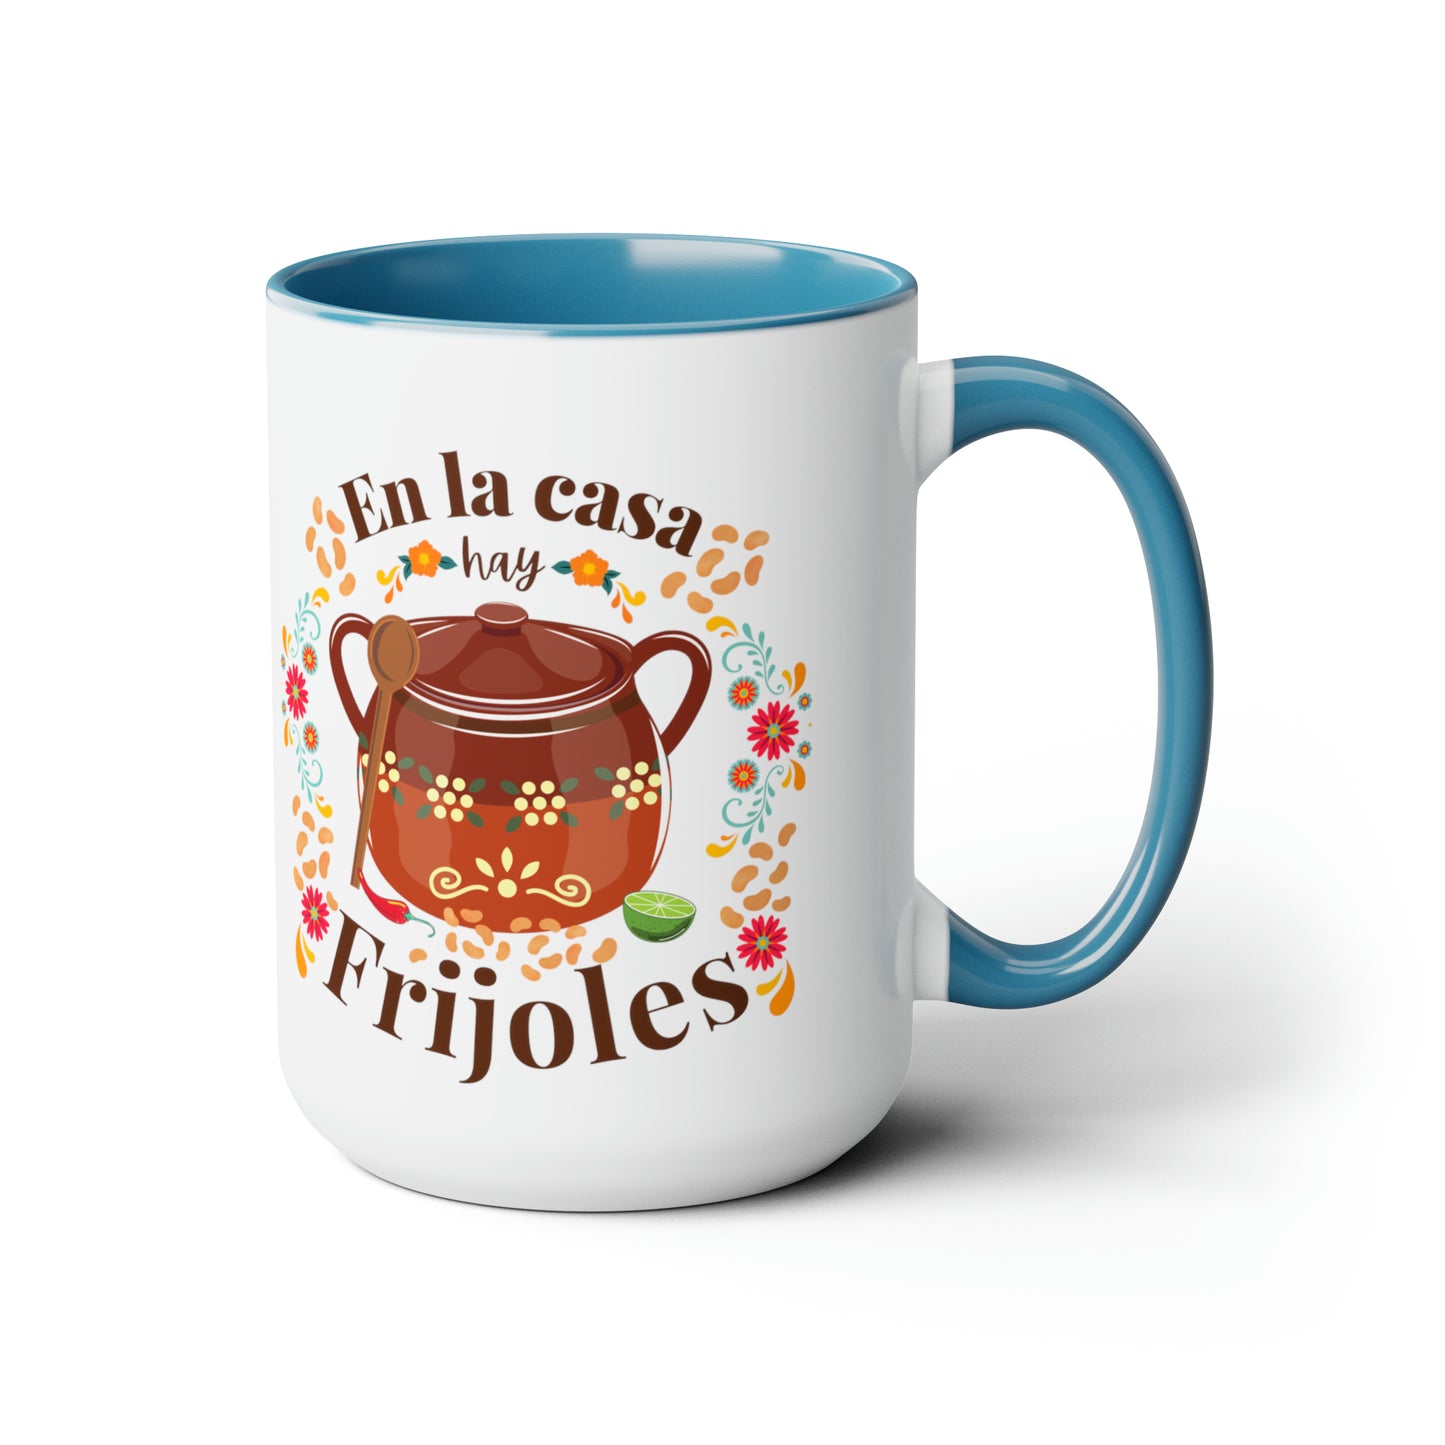 Funny Mexican Coffee Mugs, 15oz for Mexican mom. En la casa hay frijoles mug for Mothers Day, birthday day or dia de las madres